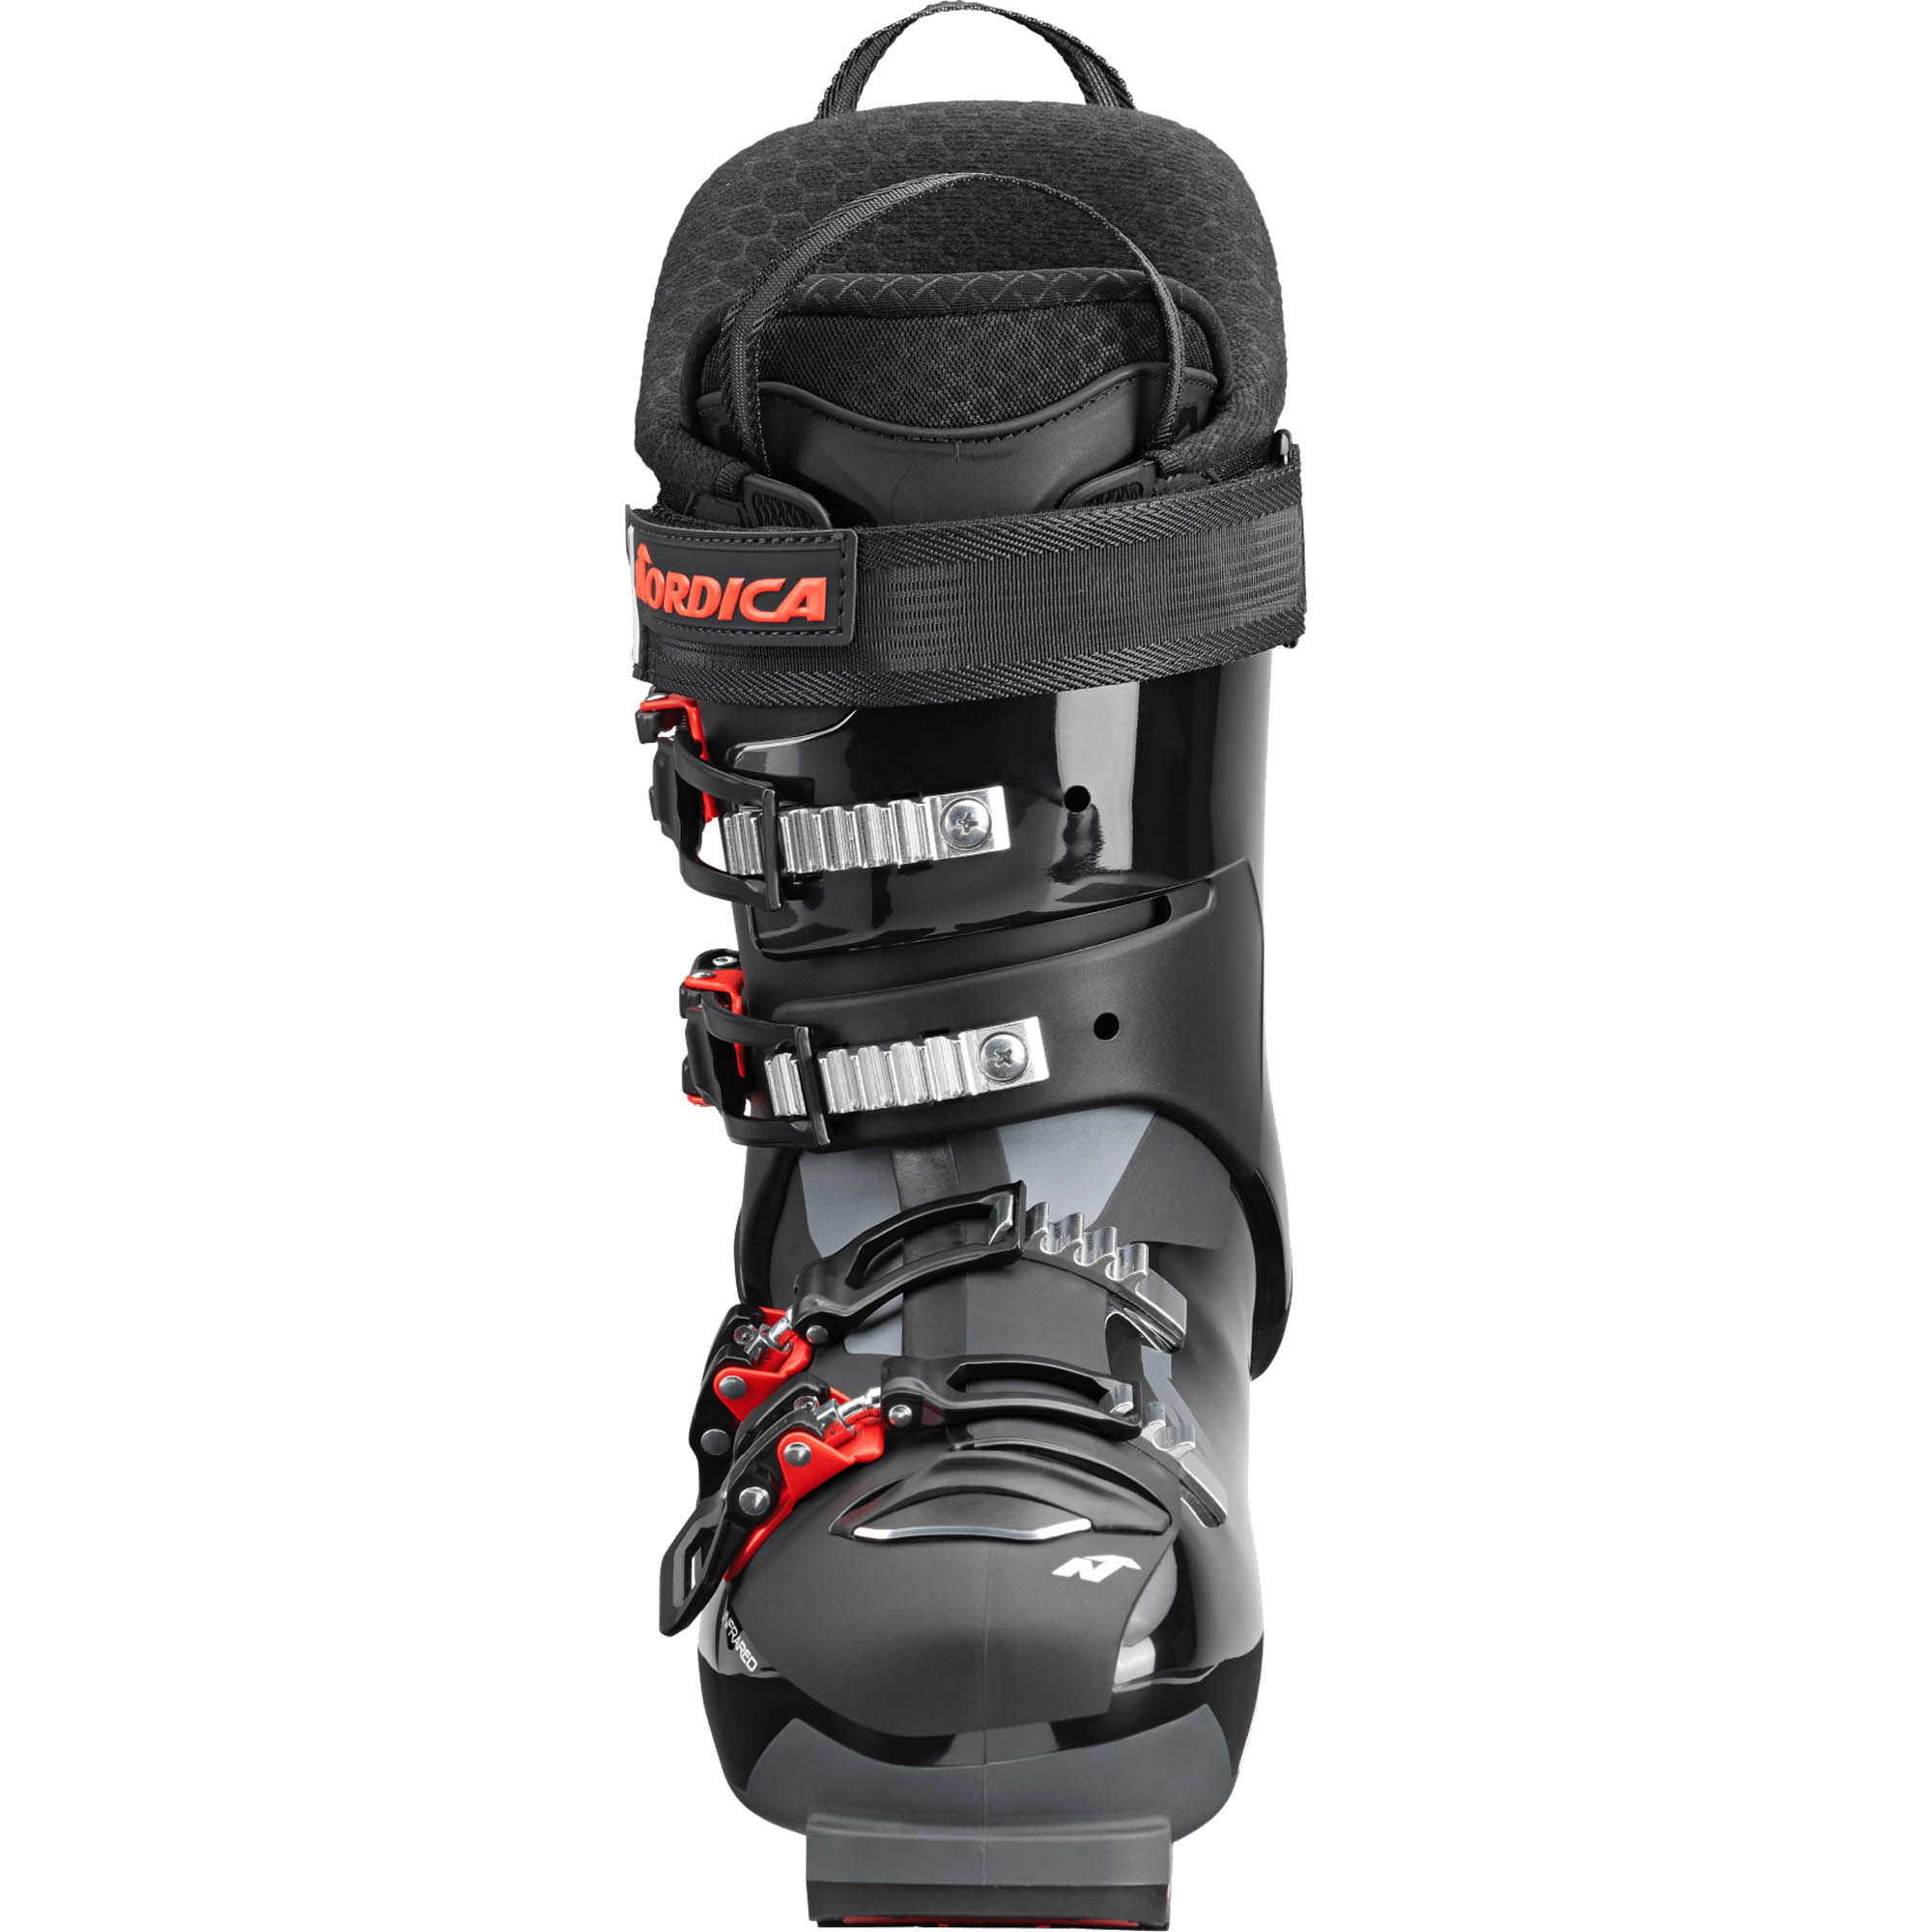 Nordica Sportmachine 3 100 GW GripWalk Ski Boots